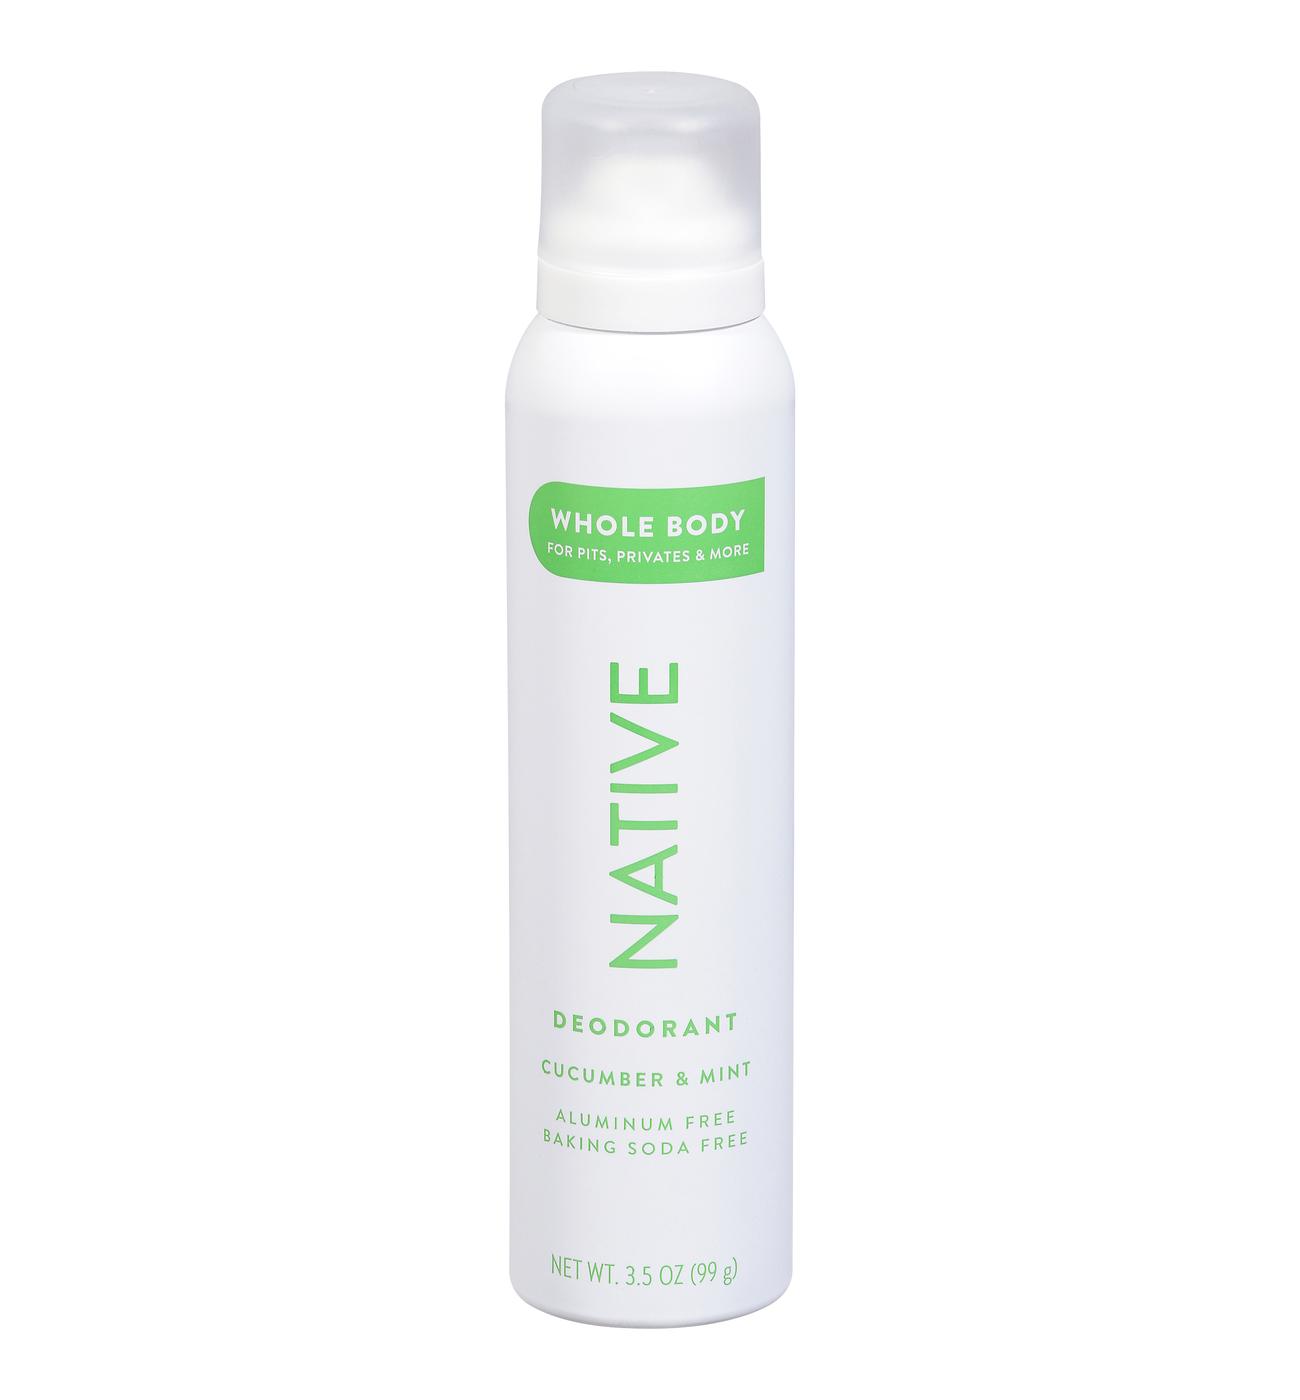 Native Whole Body Spray Deodorant - Cucumber Mint; image 1 of 2